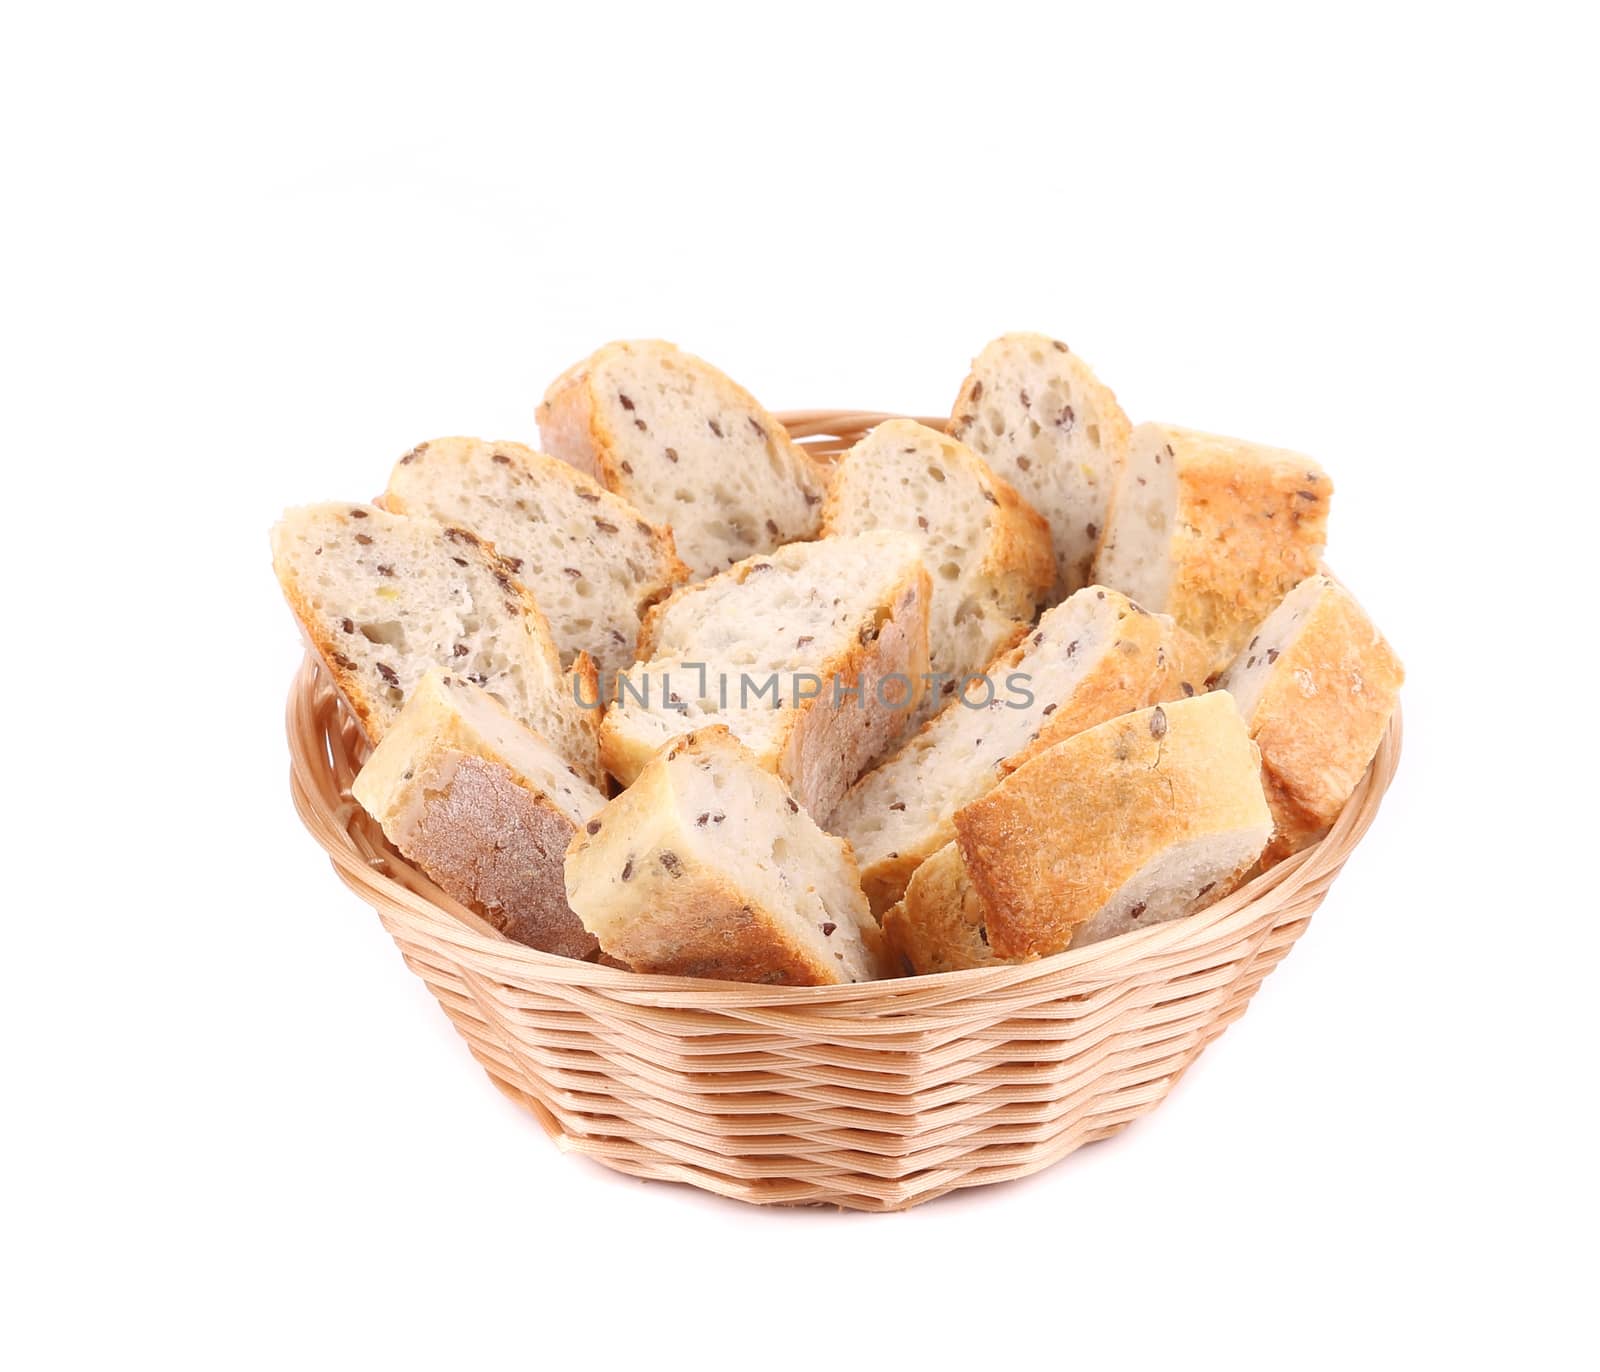 Wicker basket with bread slices. by indigolotos